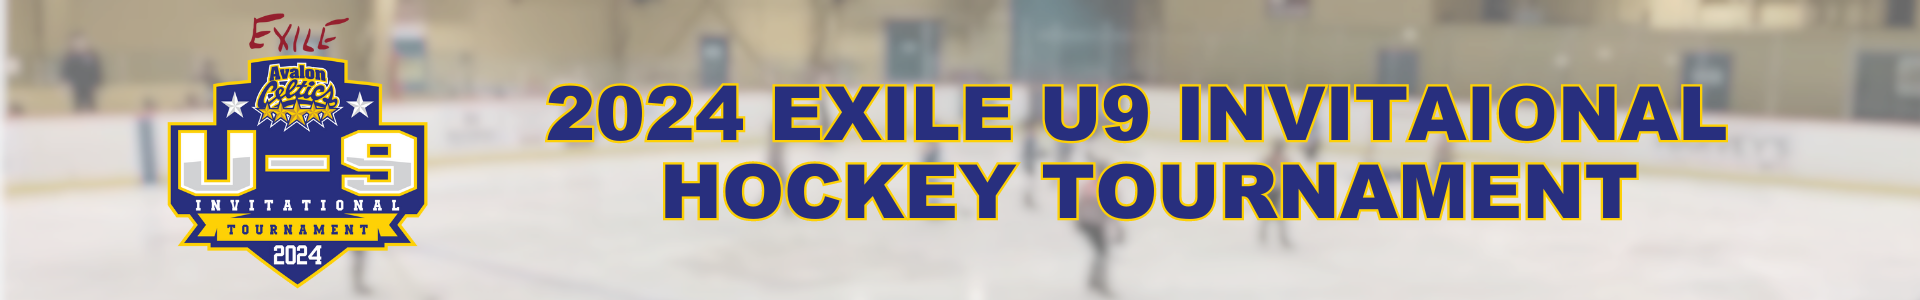 Exile U9 Invitational Hockey Tournament